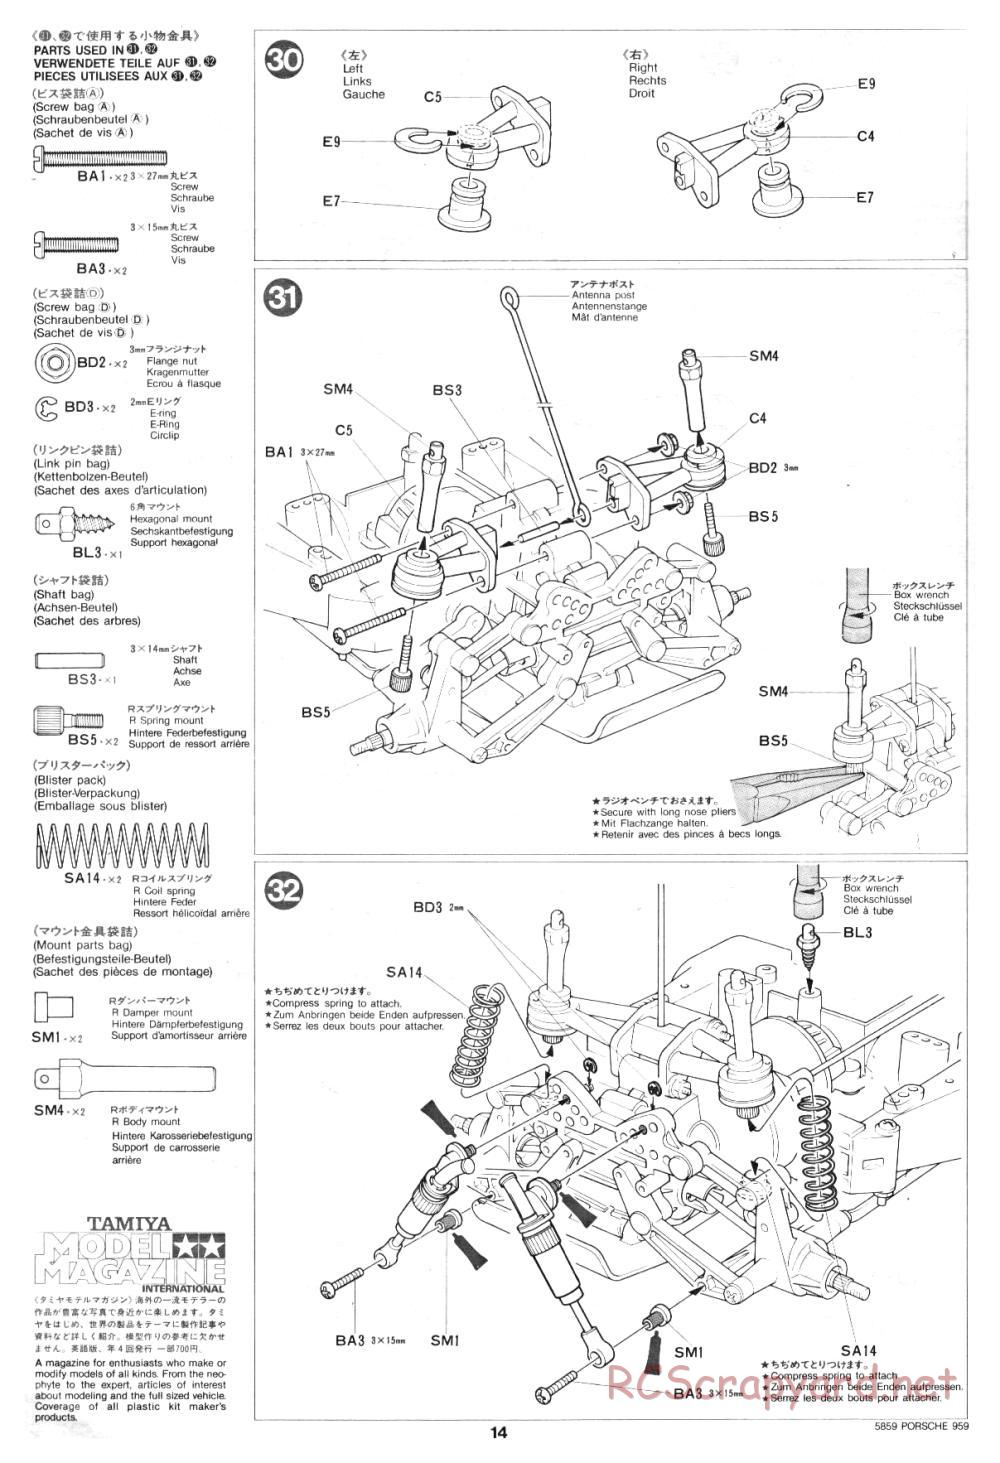 Tamiya - Porsche 959 - 58059 - Manual - Page 14